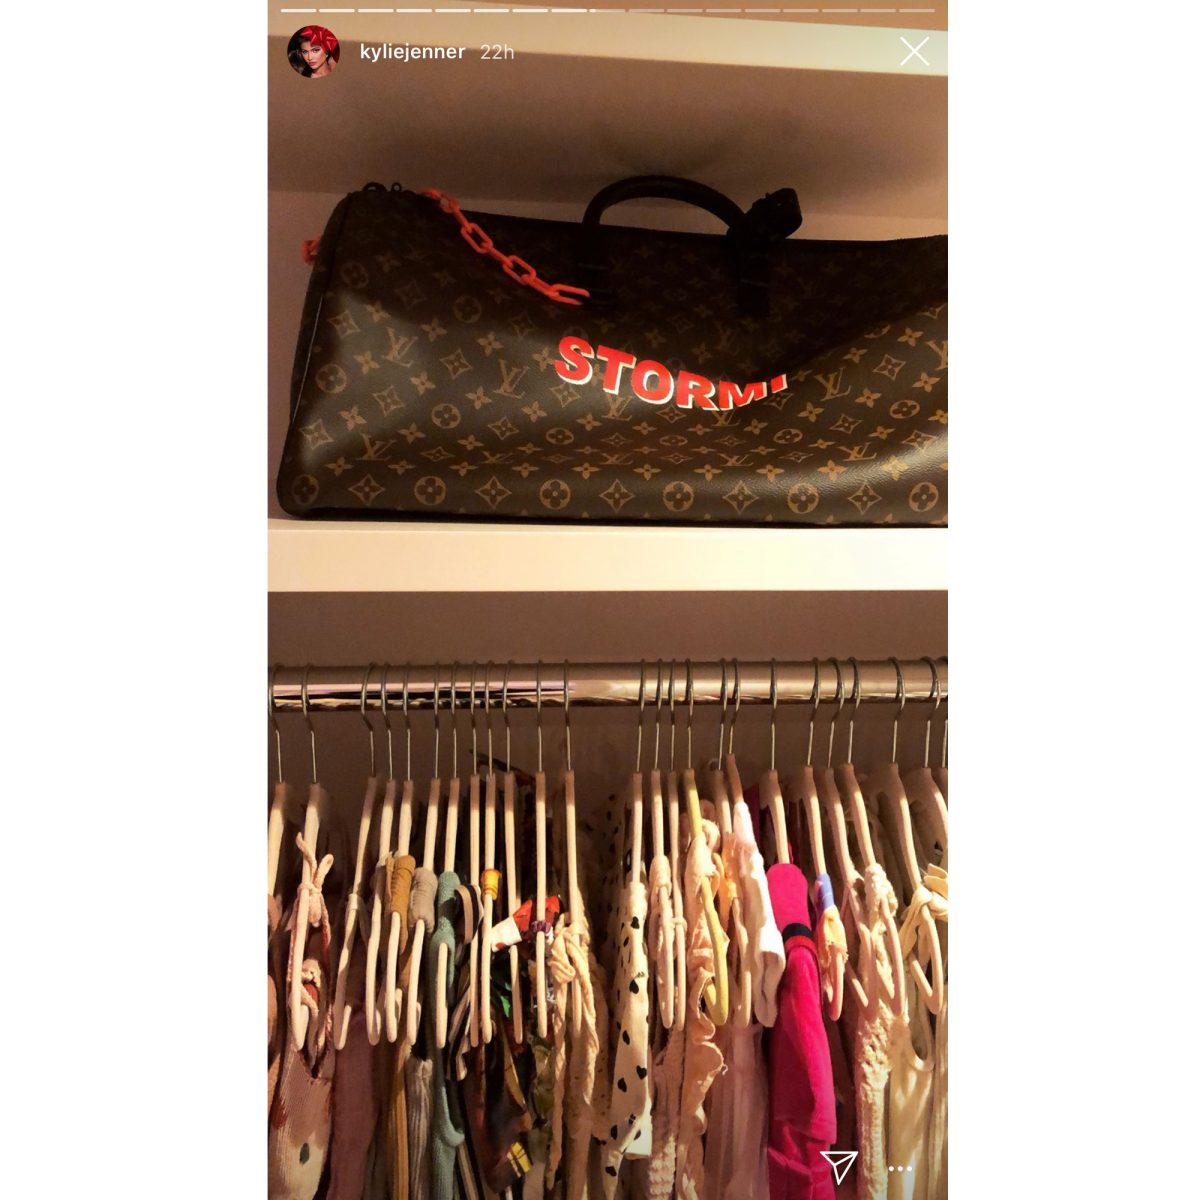 Kylie Jenner shares a peek inside Stormi's playroom with Barbies